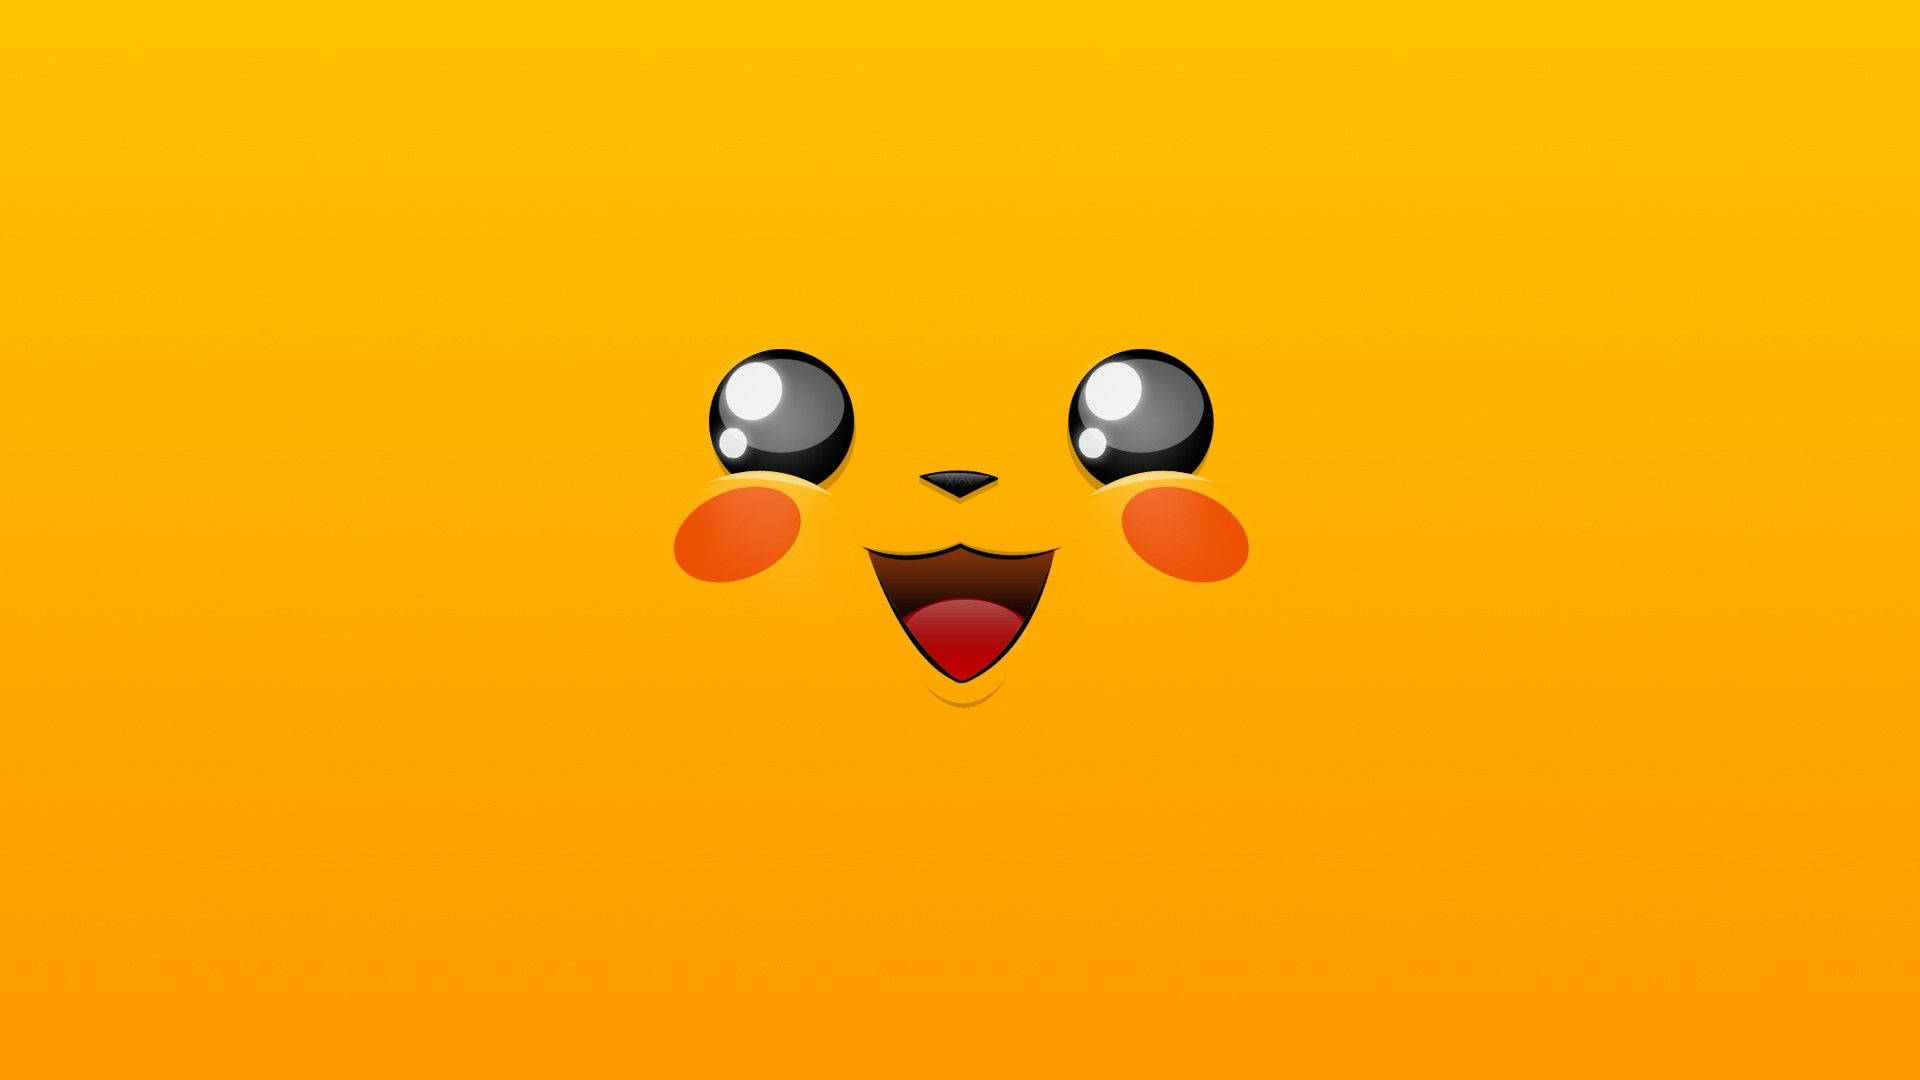 Pikachu 3d Pokémon With Goggly Eyes Wallpaper